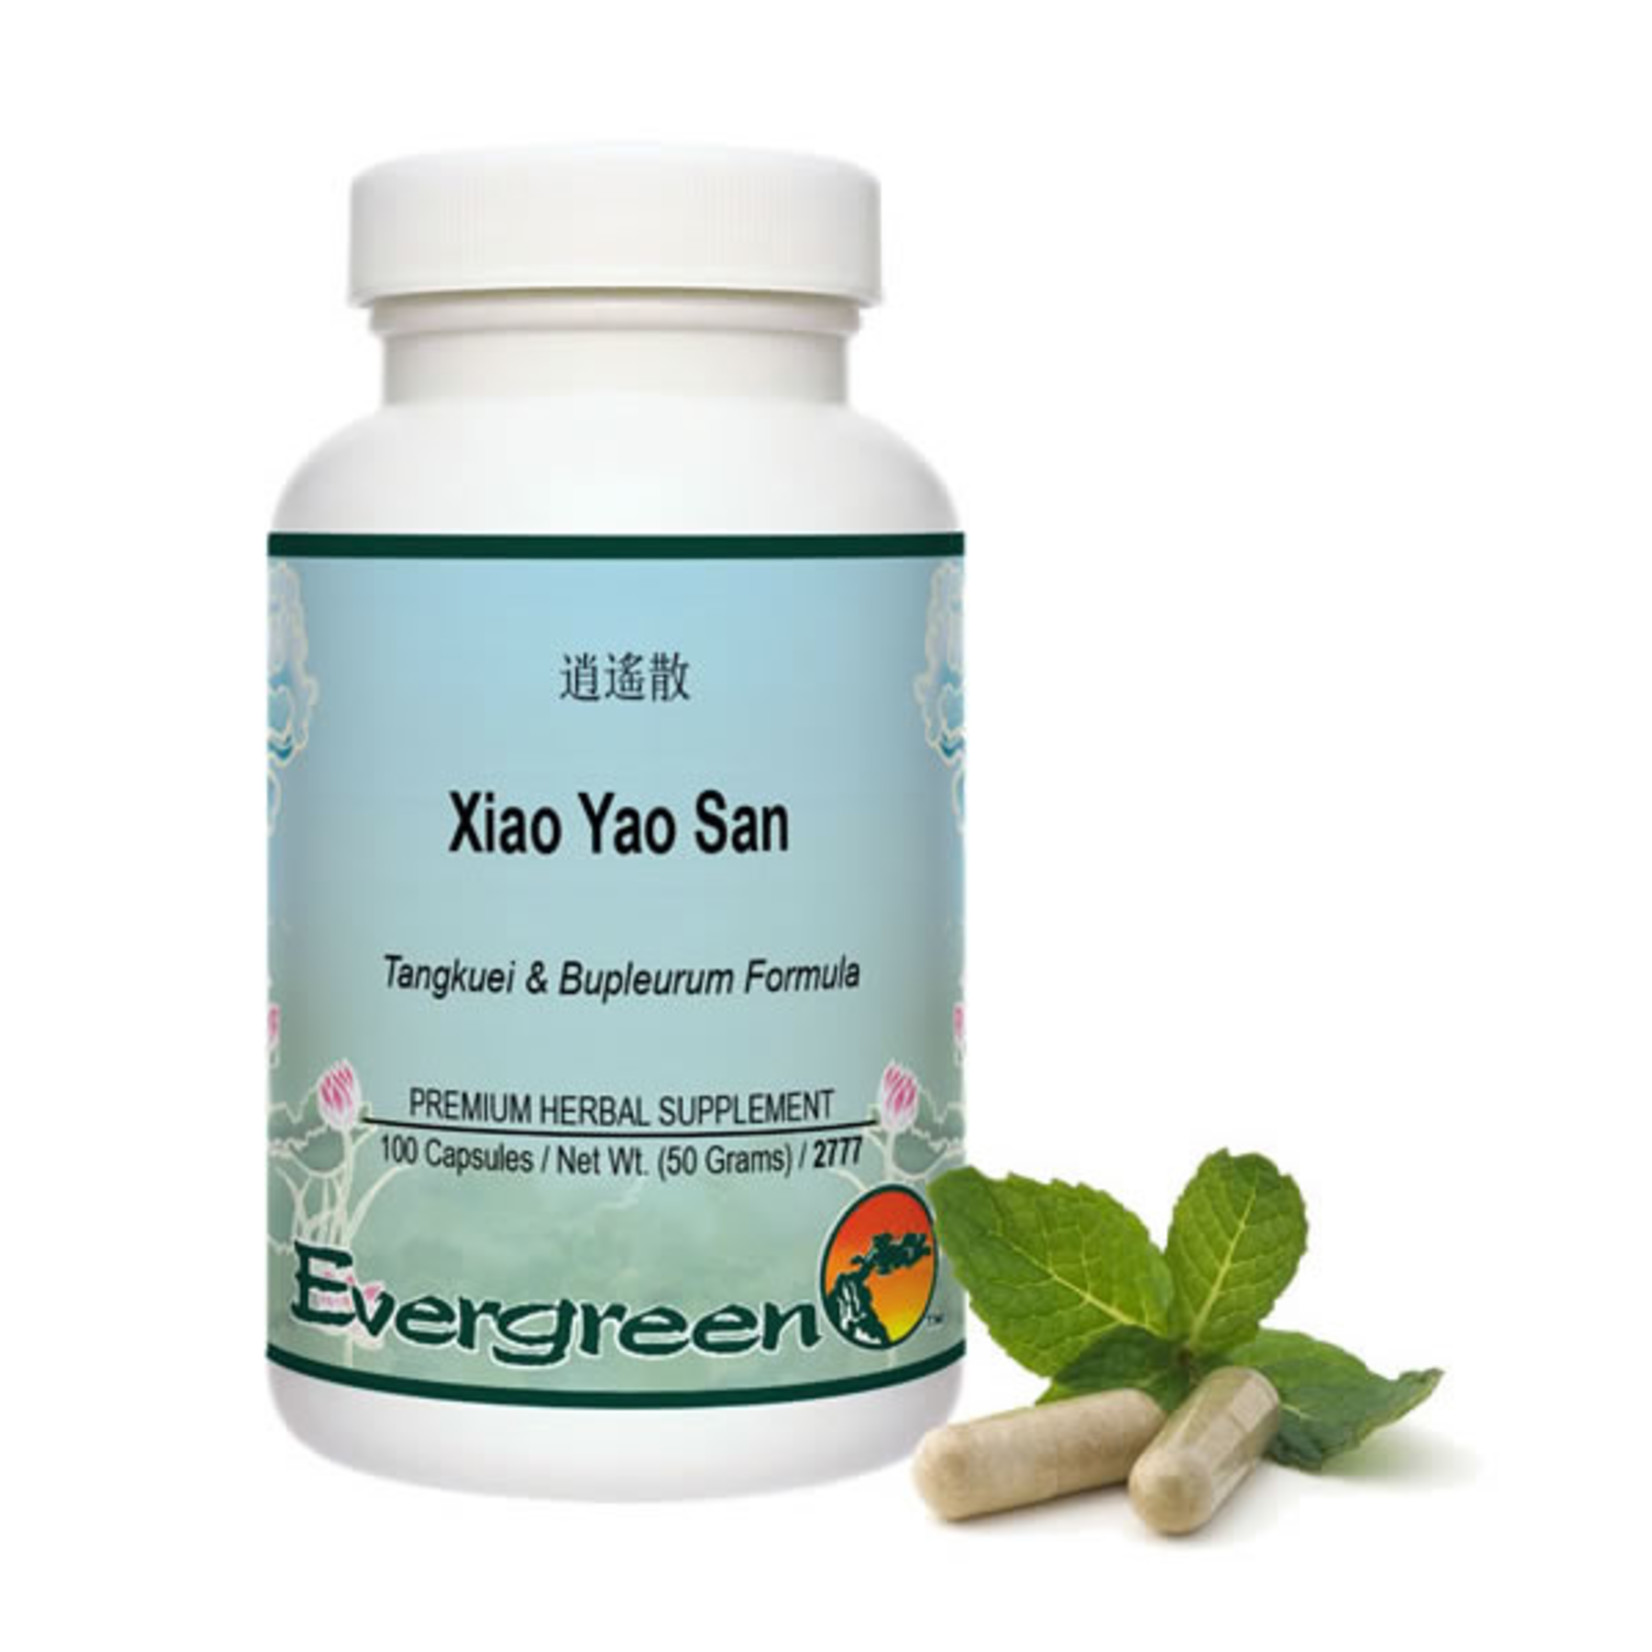 Xiao Yao San (Evergreen Herbs)